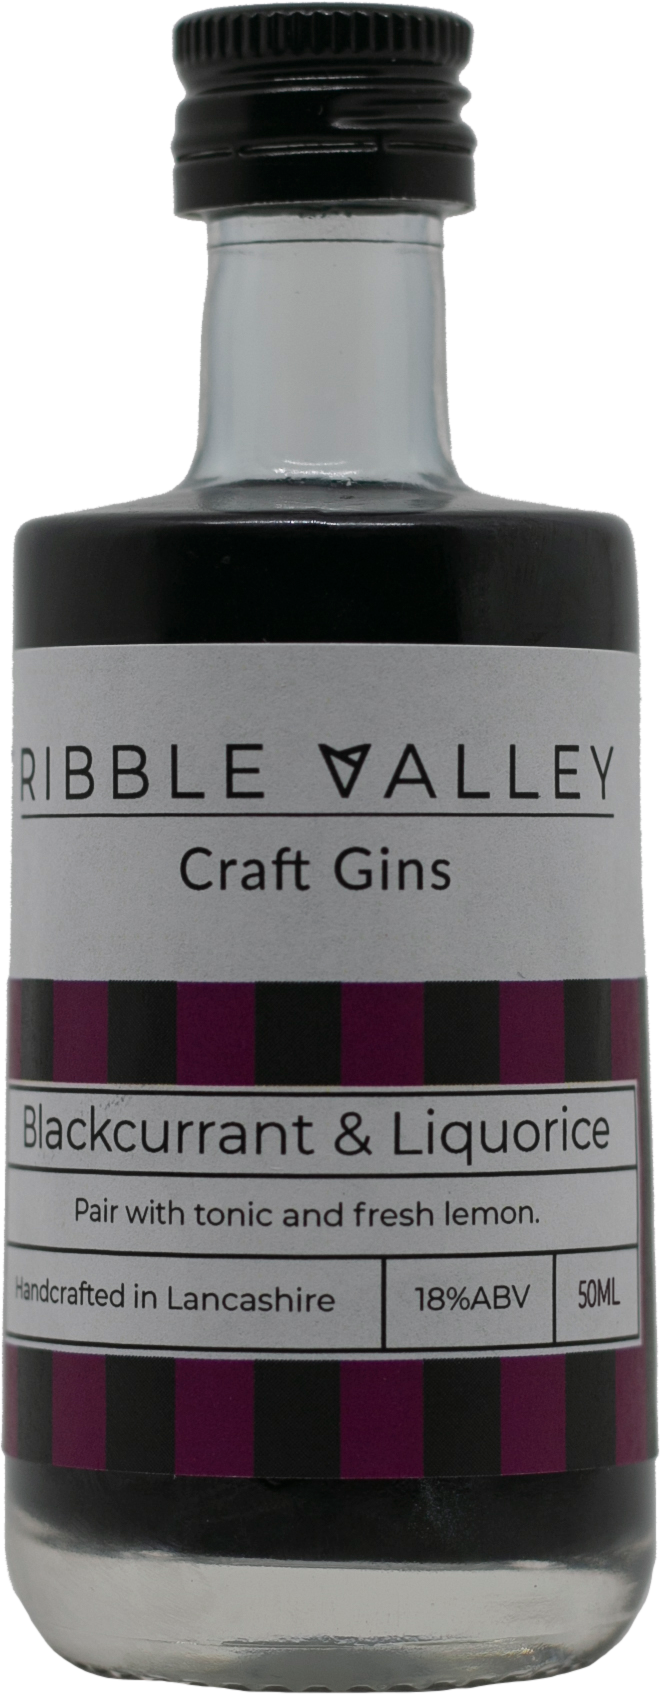 Blackcurrant & Liquorice Gin Liqueur